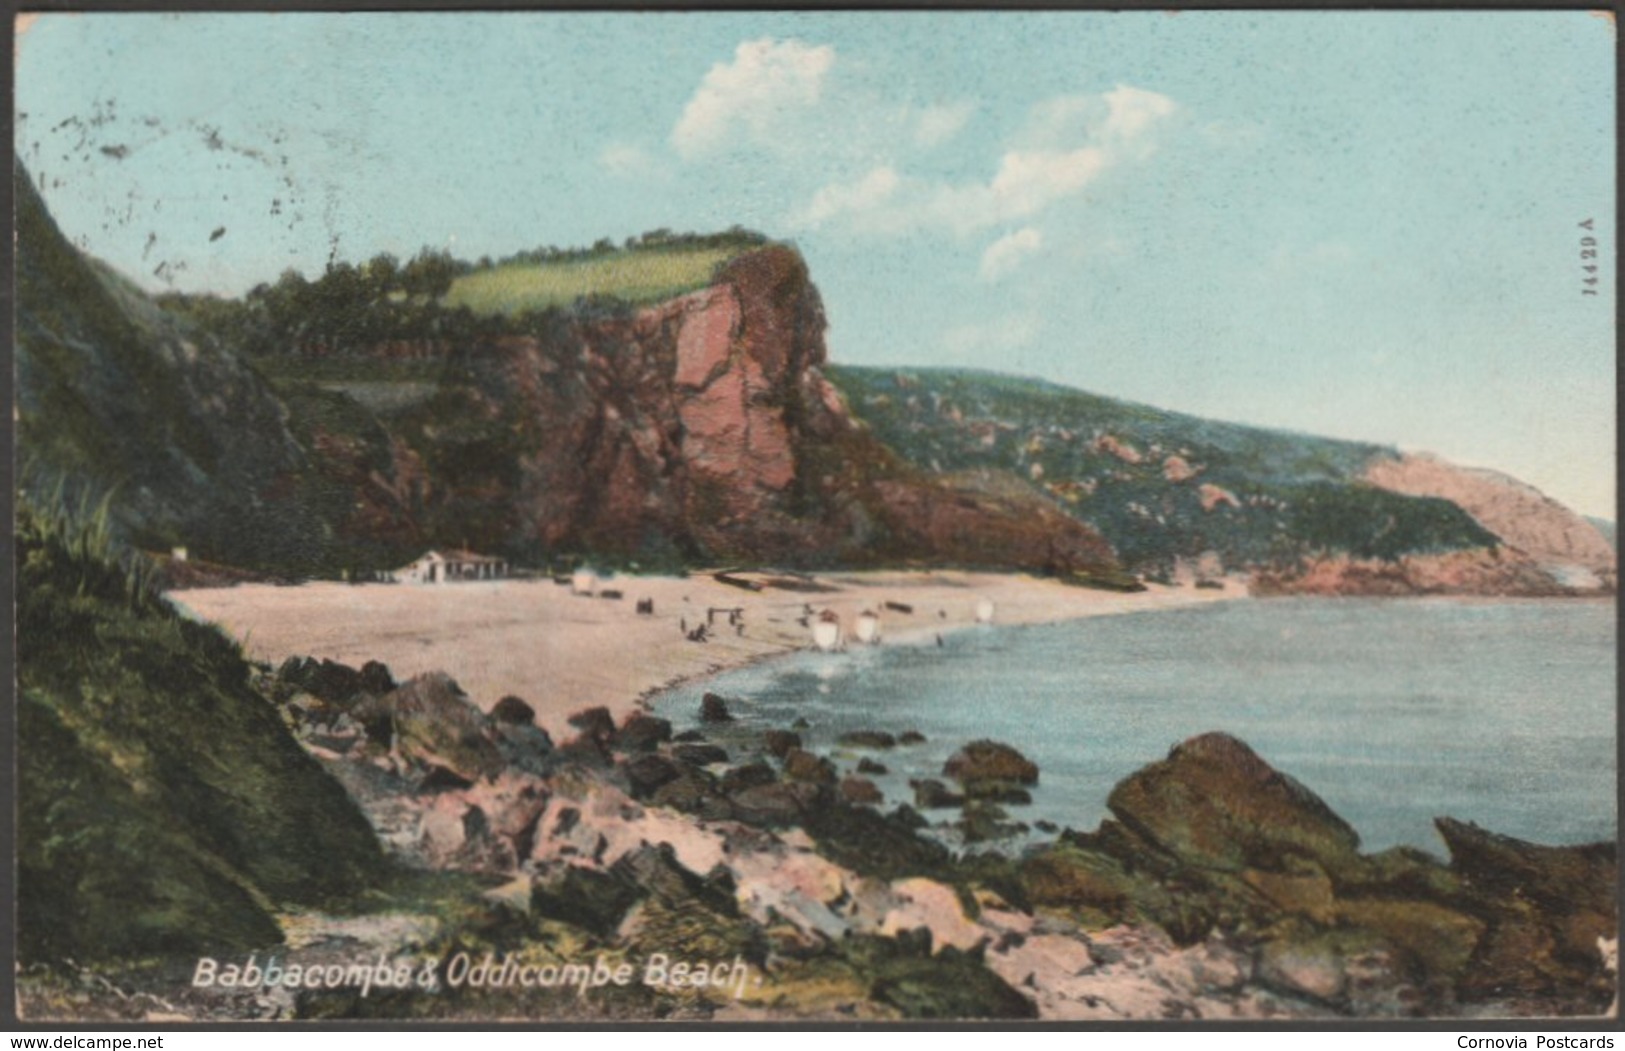 Babbacombe & Oddicombe Beach, Torquay, Devon, 1909 - Frith's Postcard - Torquay